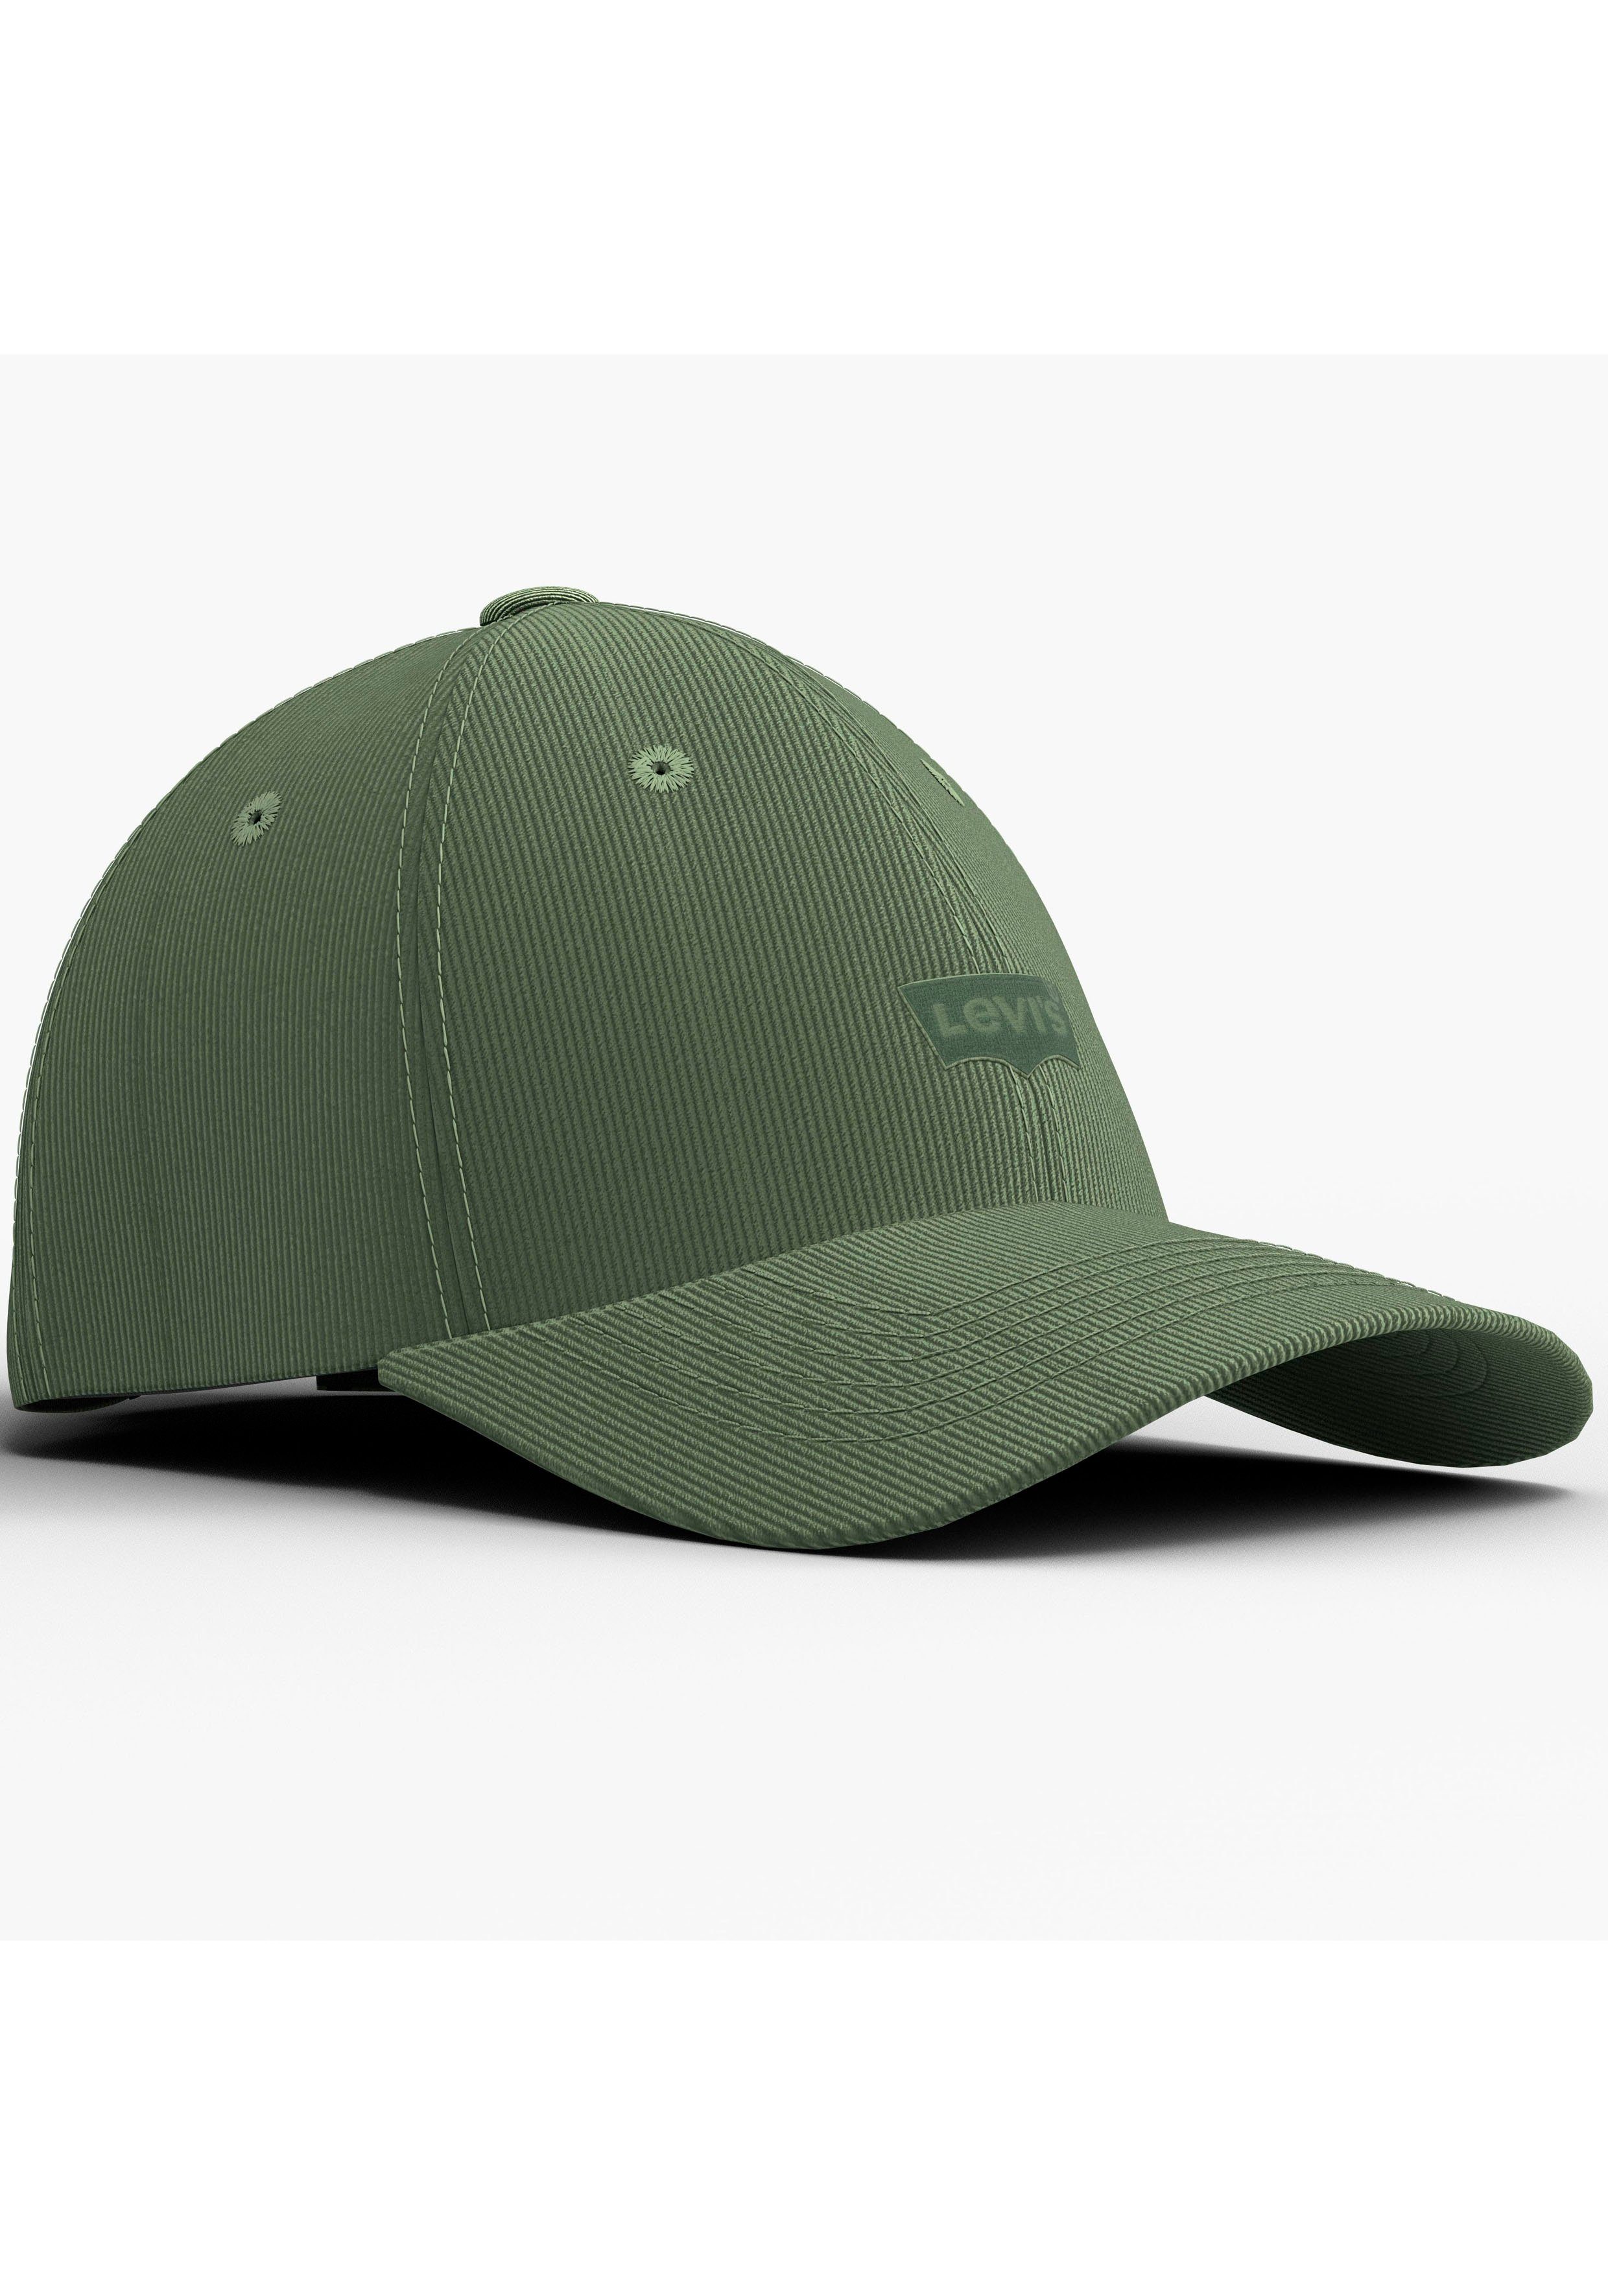 Levi's® Baseball Cap HOLIDAY CORD dark green CAP